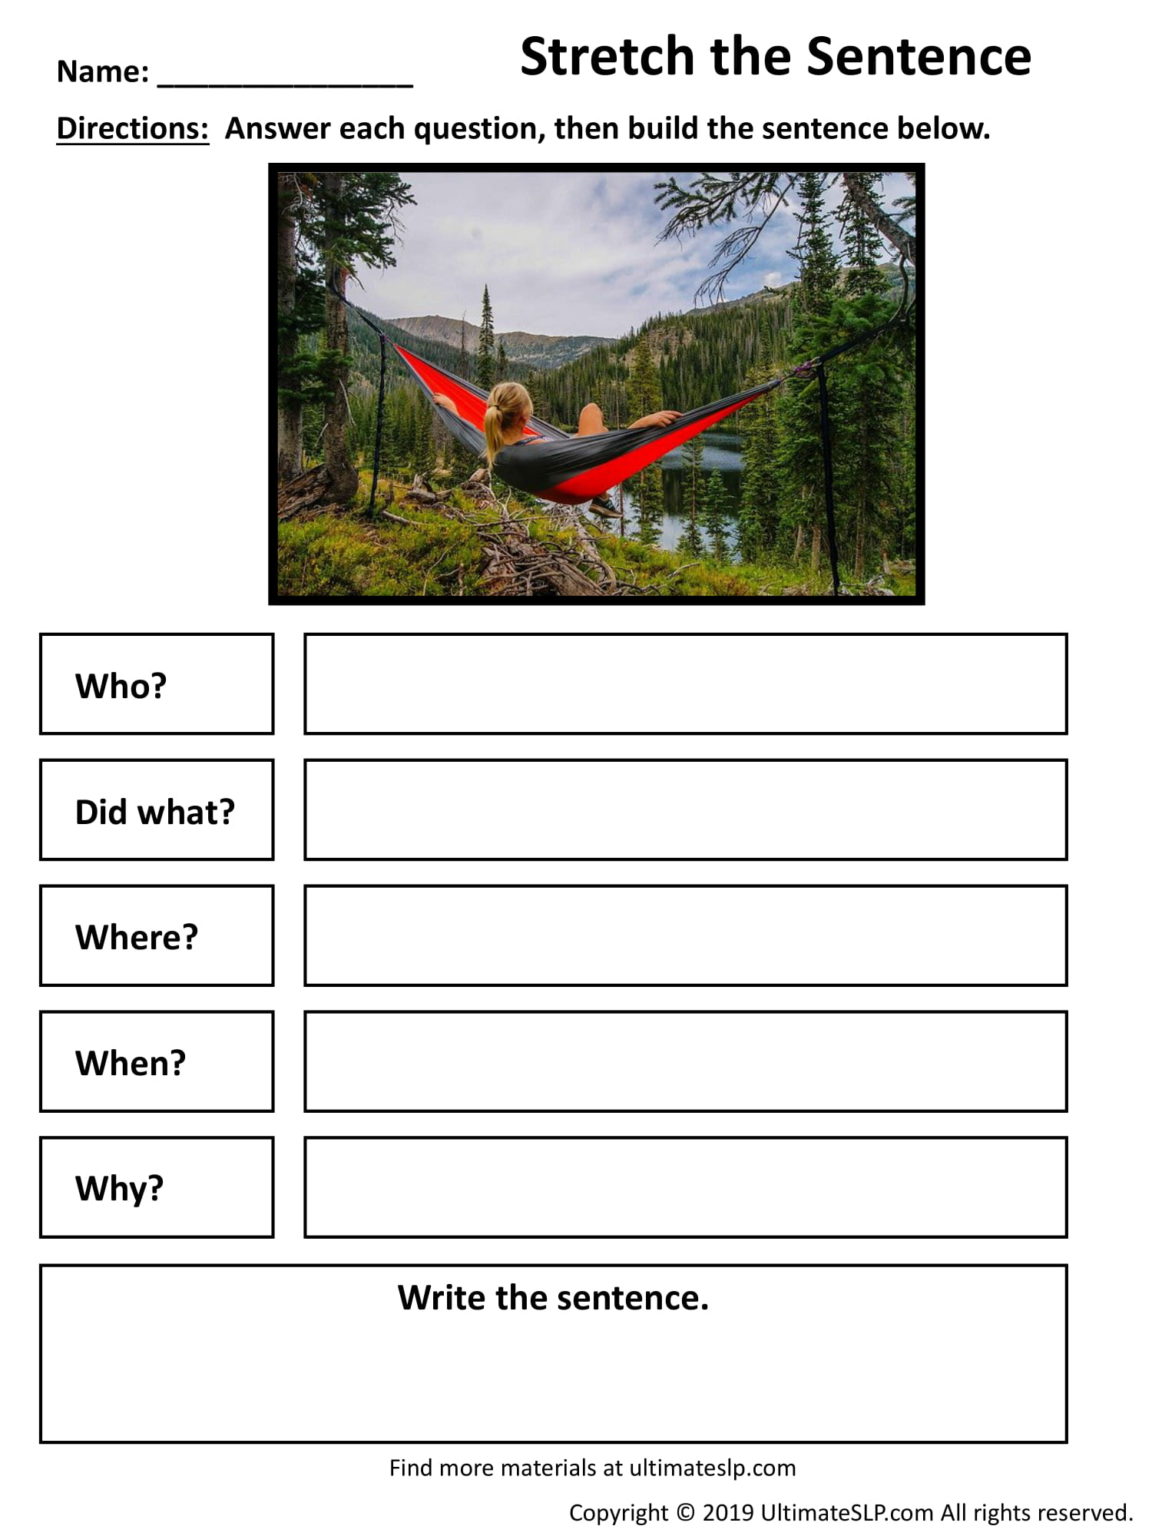 Stretch the Sentence Worksheet 5 - Ultimate SLP